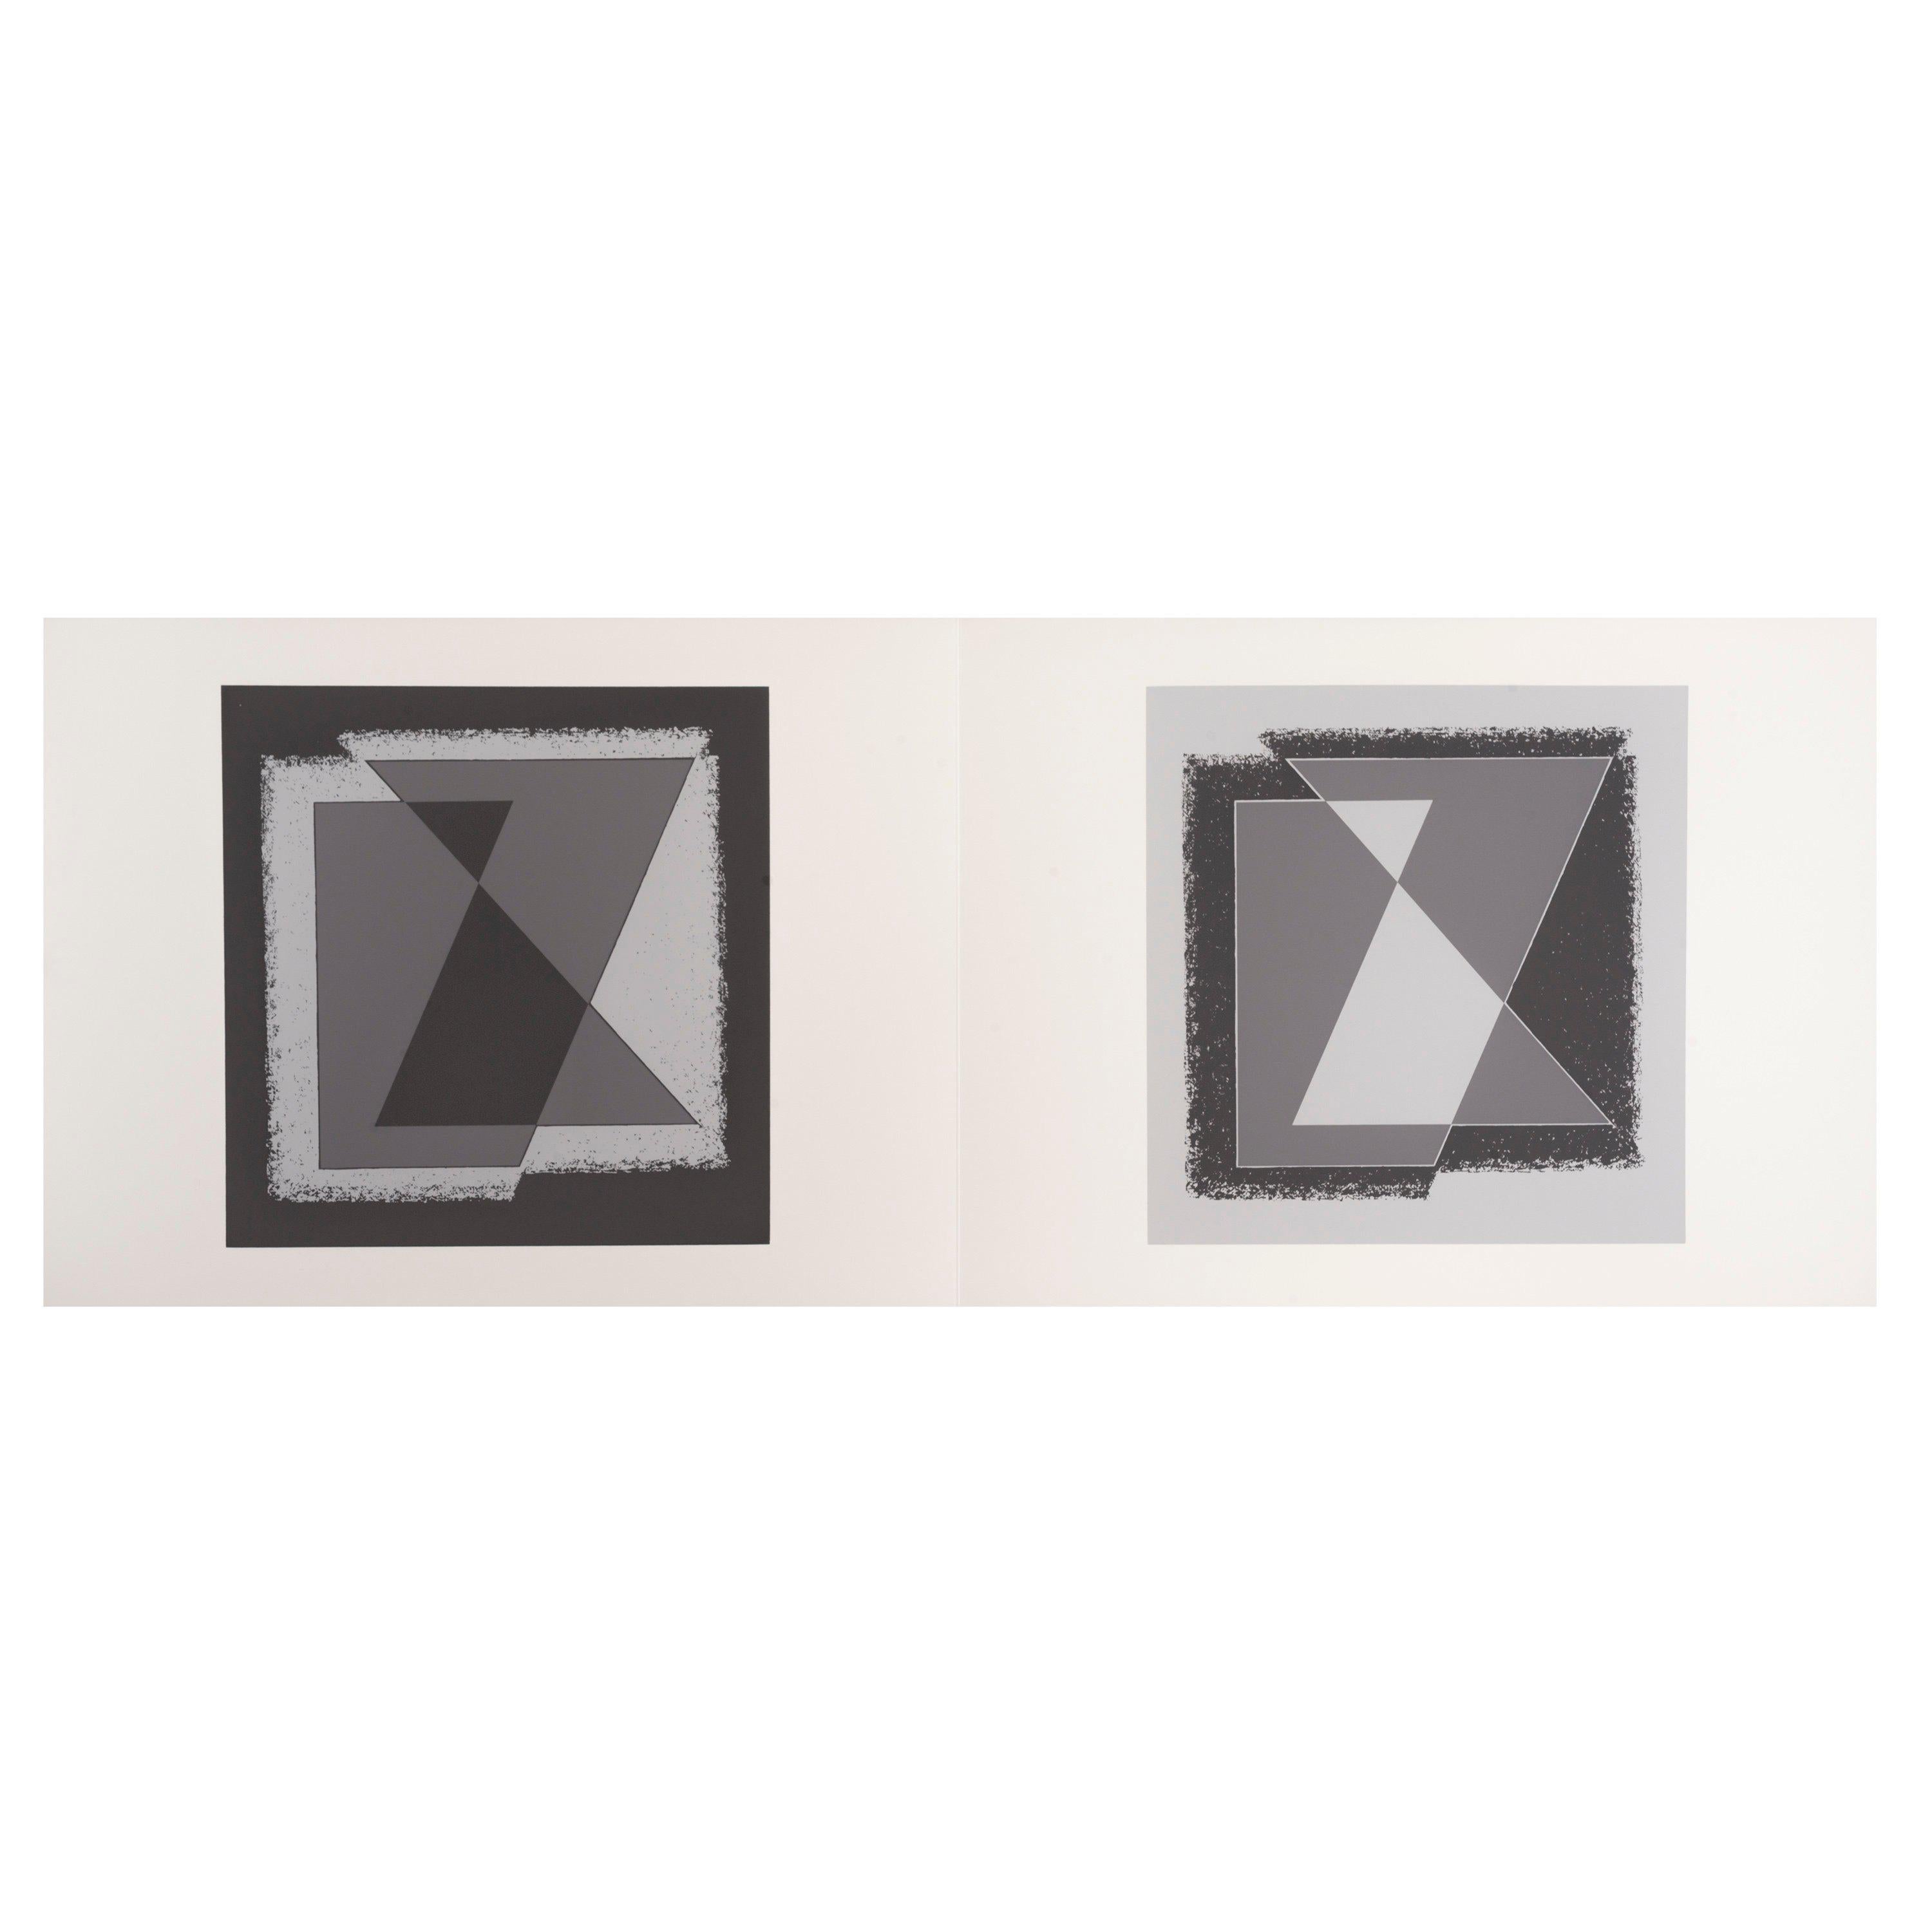 Josef Albers "Formulation : Articulation" Portfolio II, Folder 30 For Sale